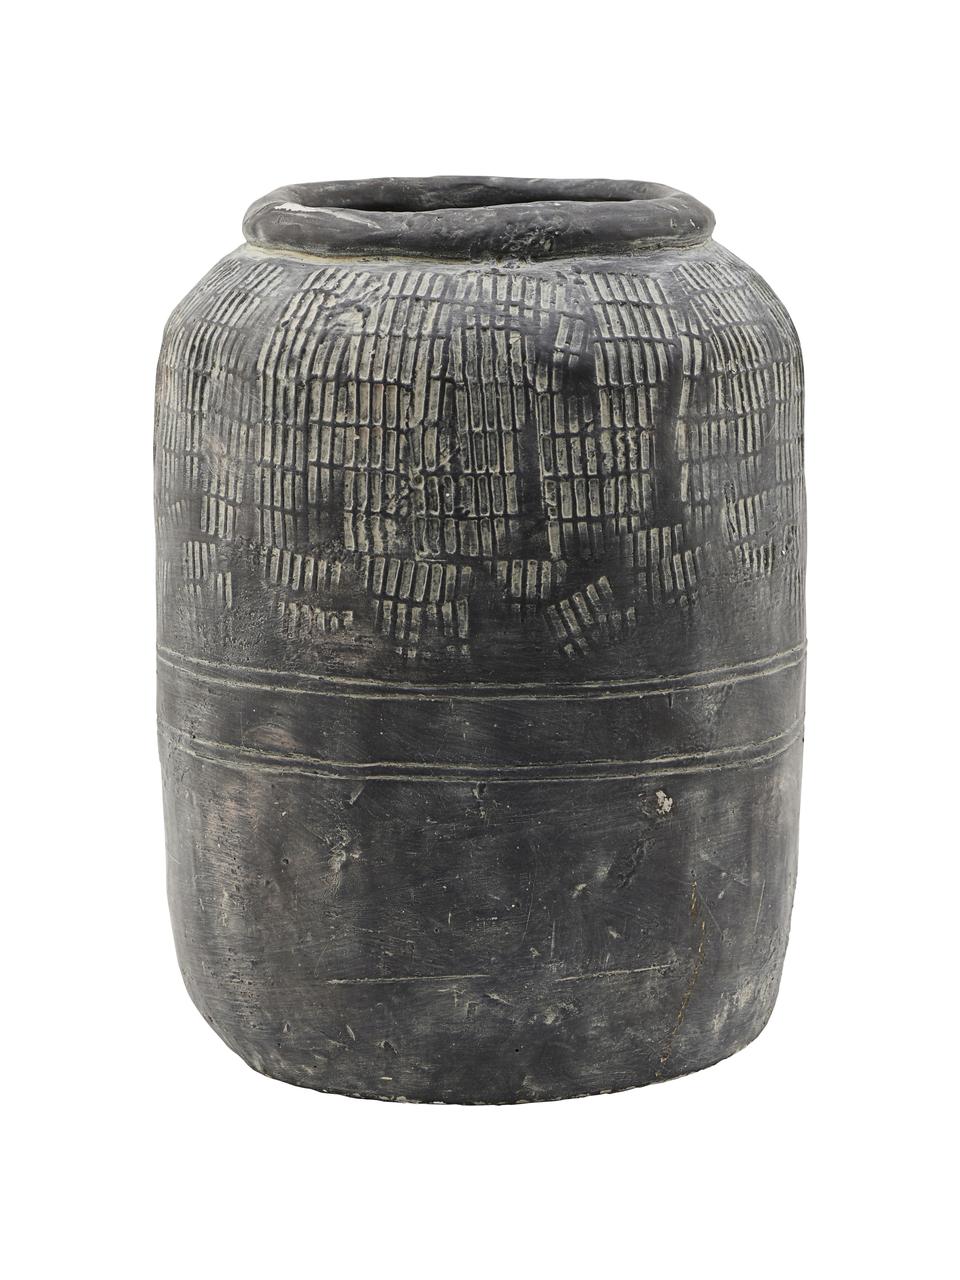 Grosse Vase Jalna aus Beton, Beton, Grautöne, Ø 24 x H 32 cm